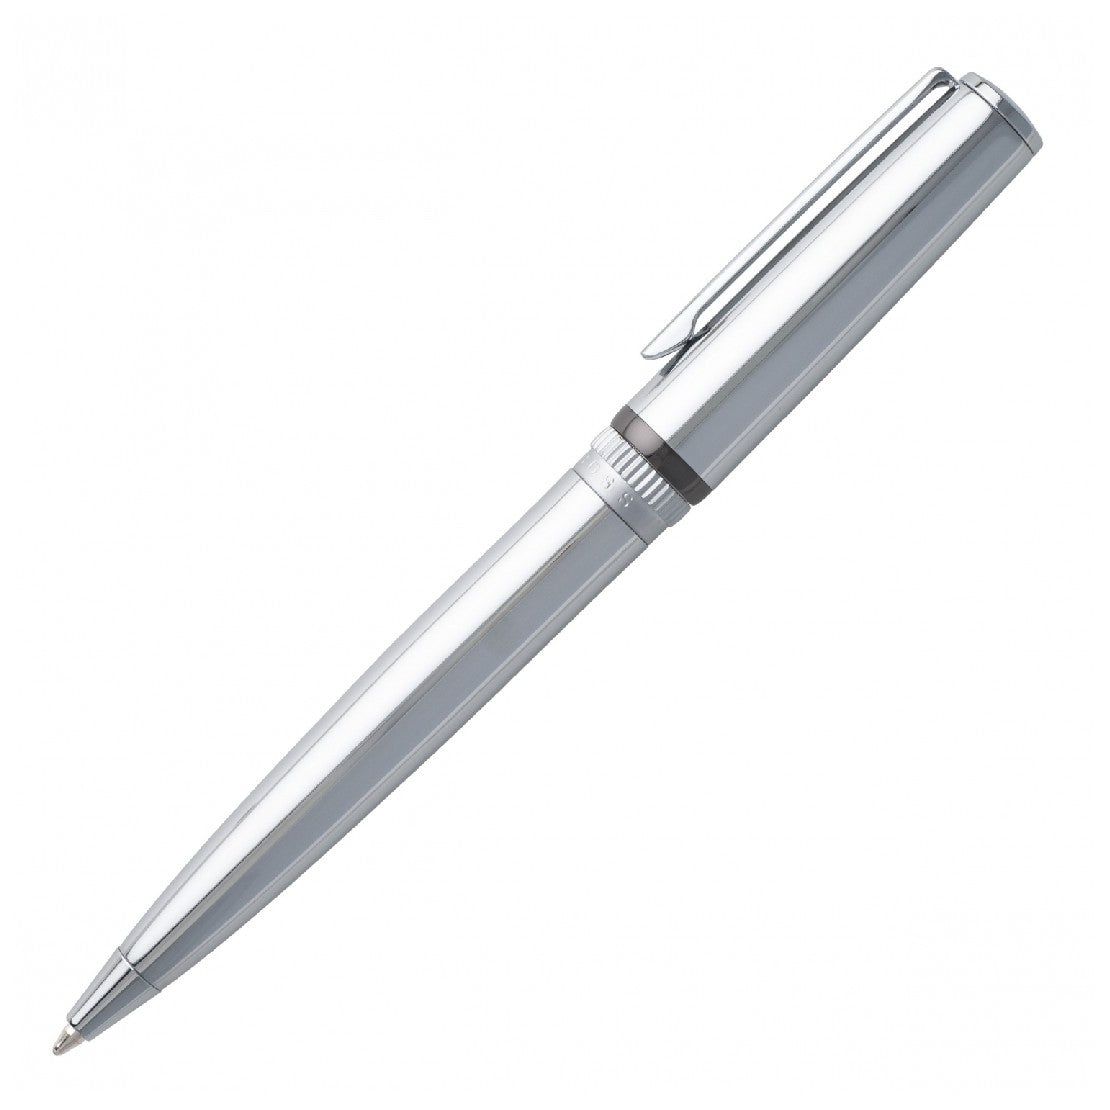 Hugo Boss Silver Chrome Pen - HBPEN-0015